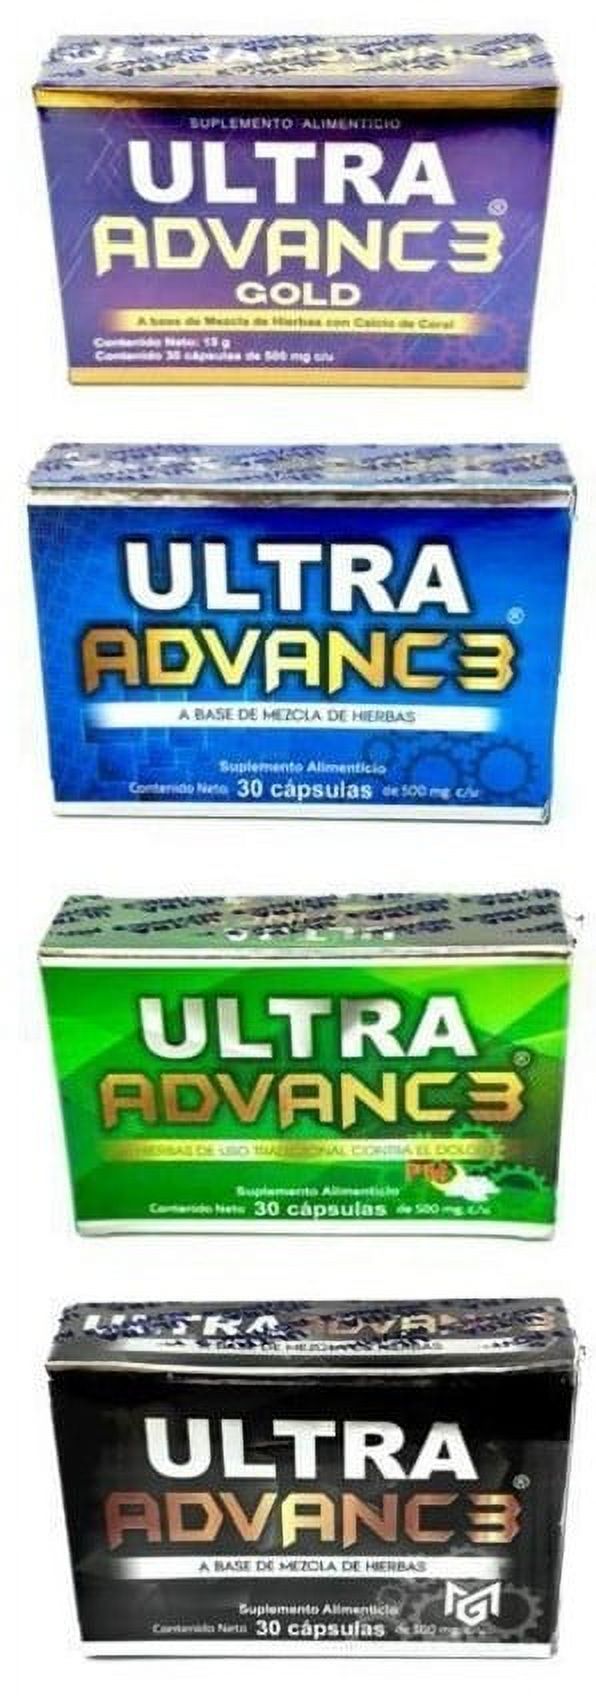 Ultra Advance 3 Ultra Advanc3 (30 Cápsulas de 500mg) - image 5 of 5